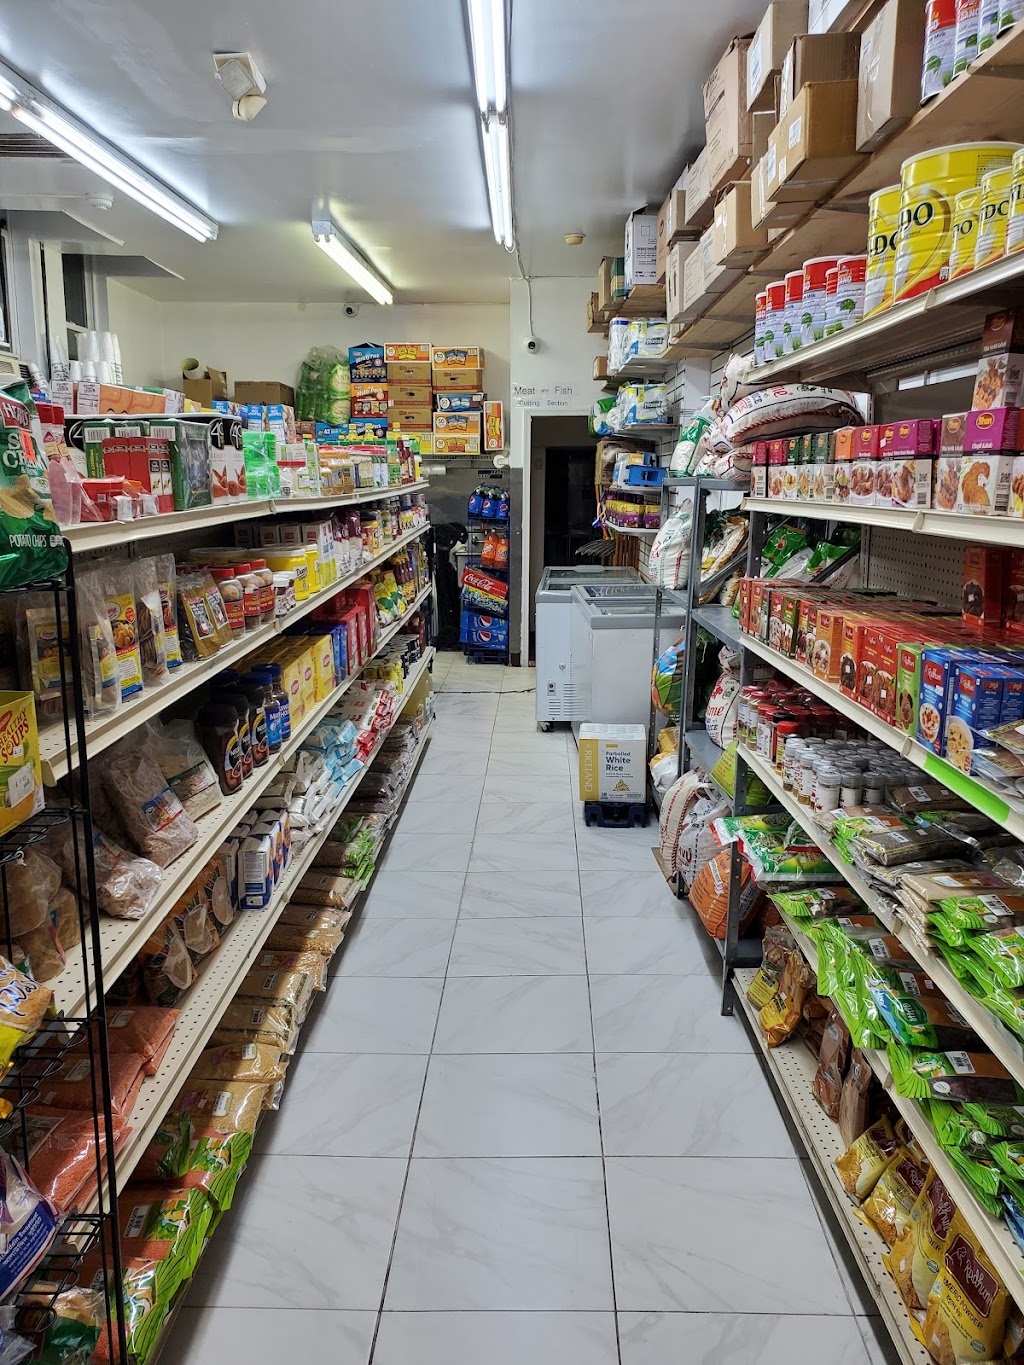 Bangla Bazar Halal Foods & Varieties | 5343 Market St, Philadelphia, PA 19139 | Phone: (267) 357-9577